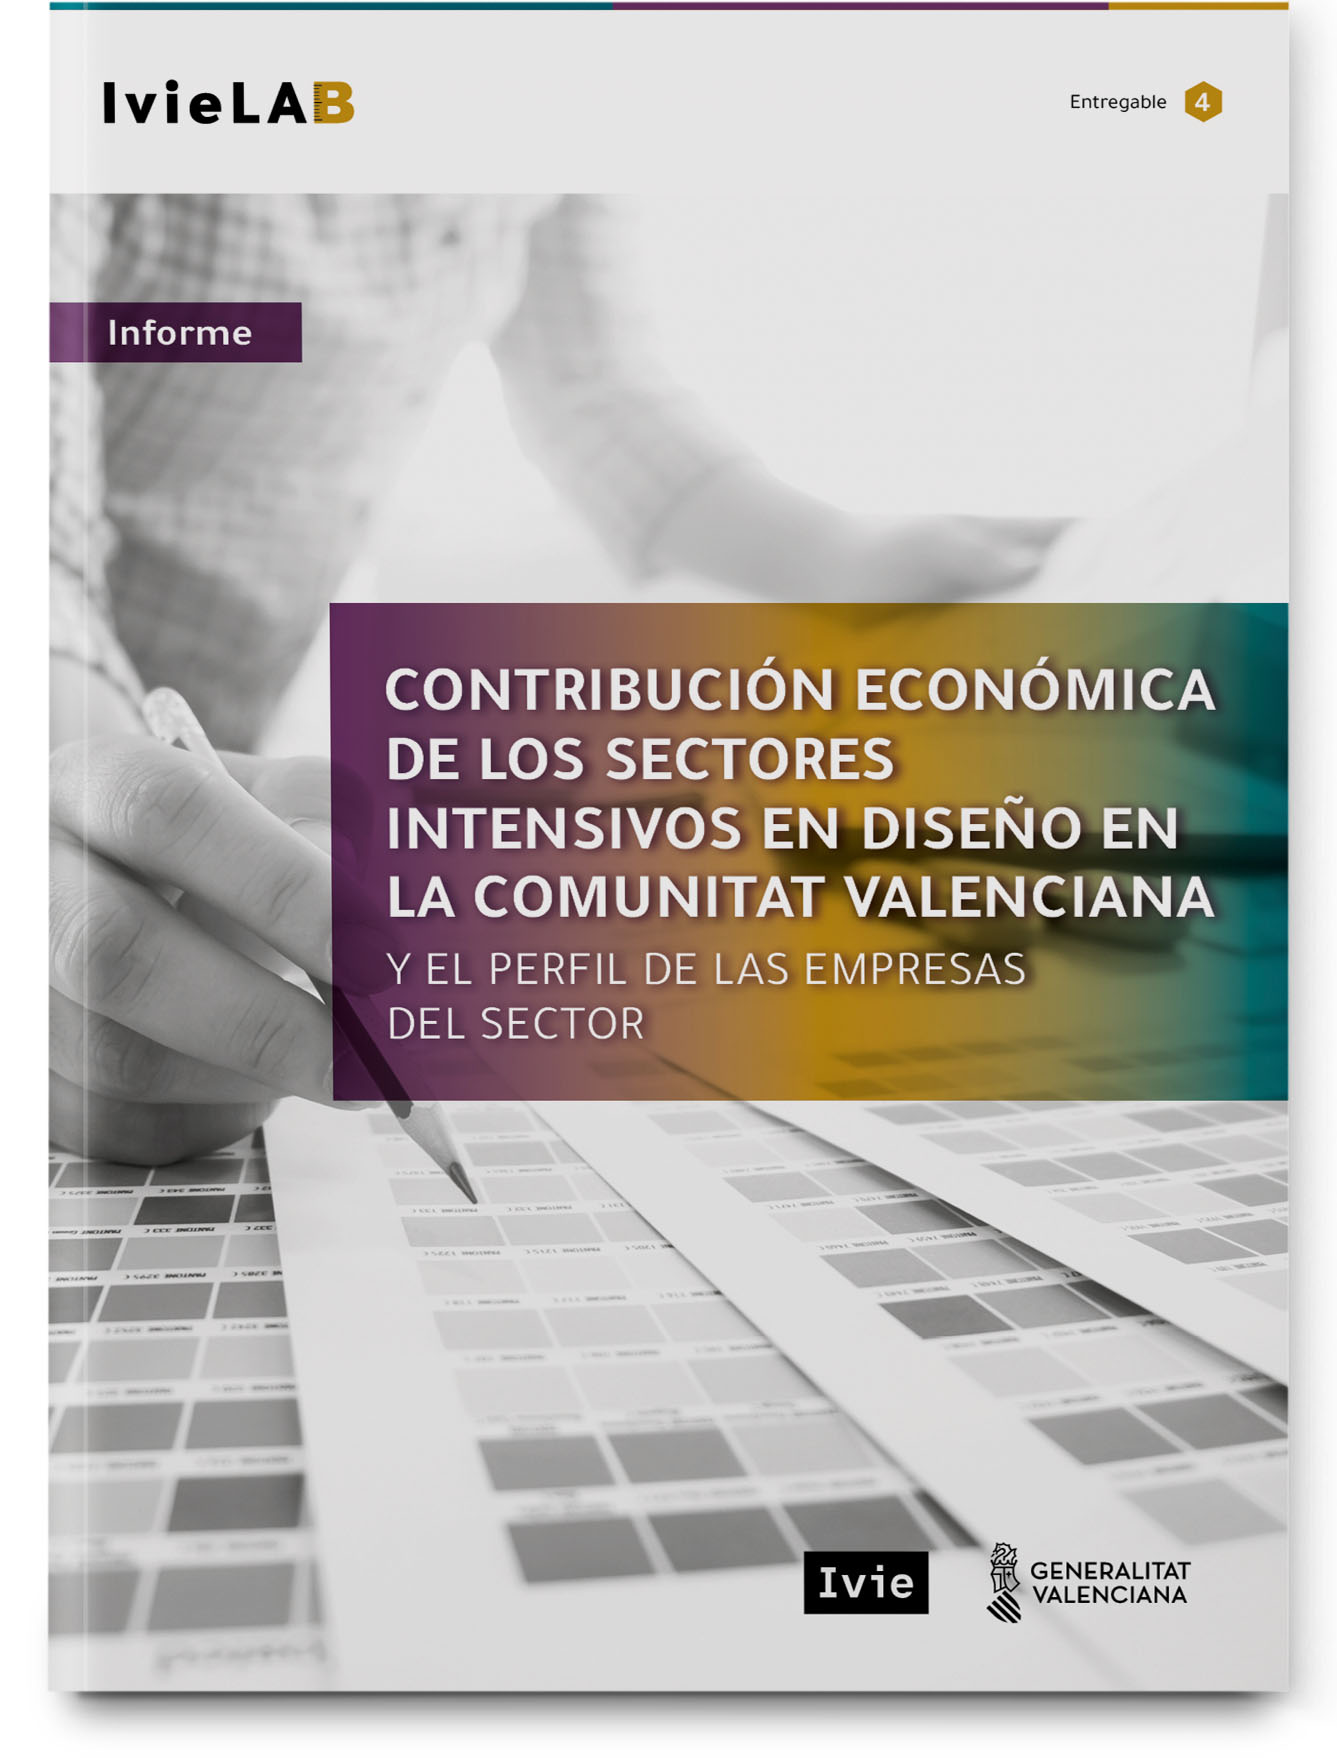 Economic contribution of the Valencian Community’s design-intensive sectors 